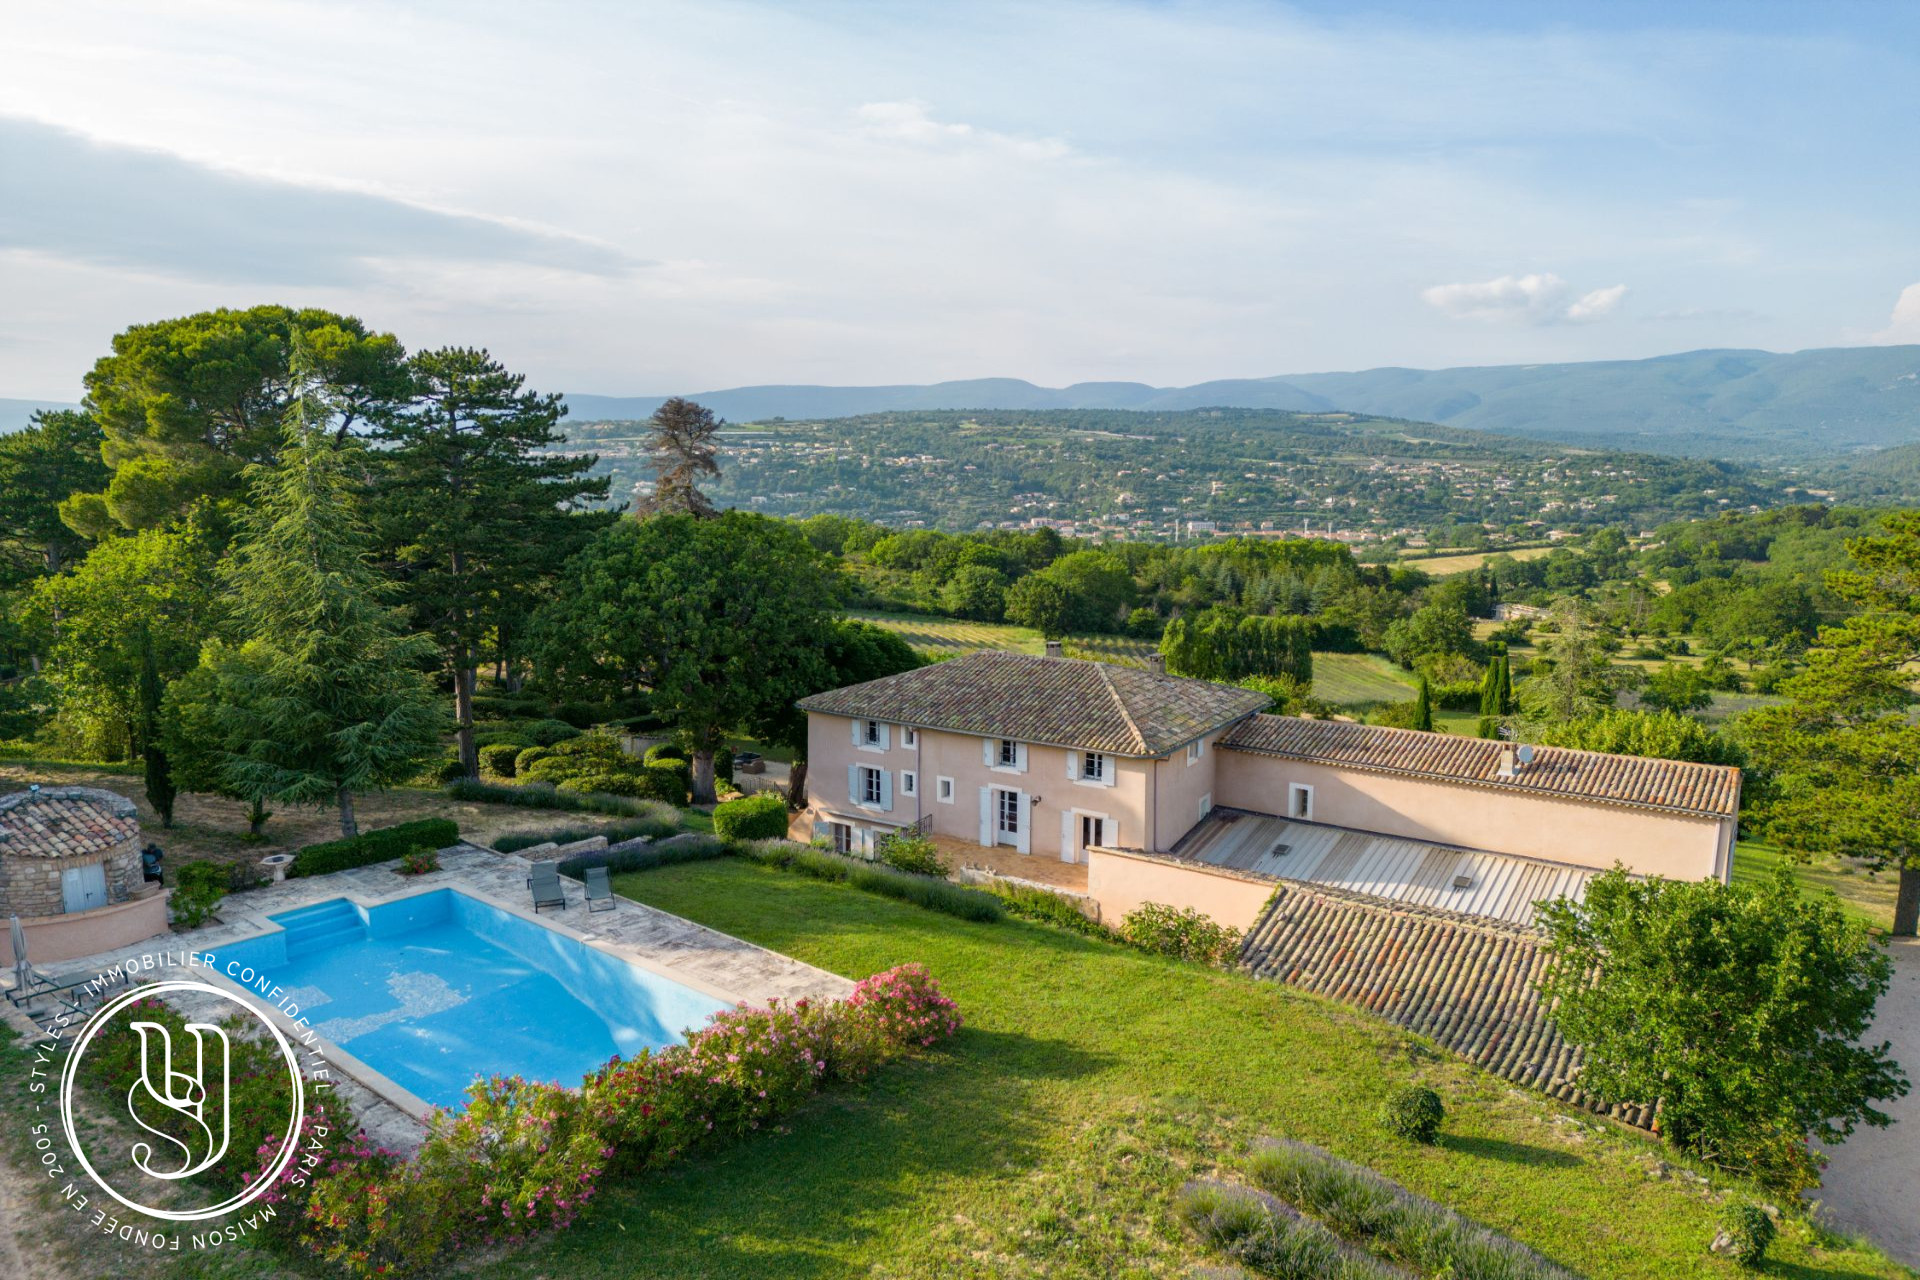 Saignon - a Provençal countryside with breathtaking views - image 12